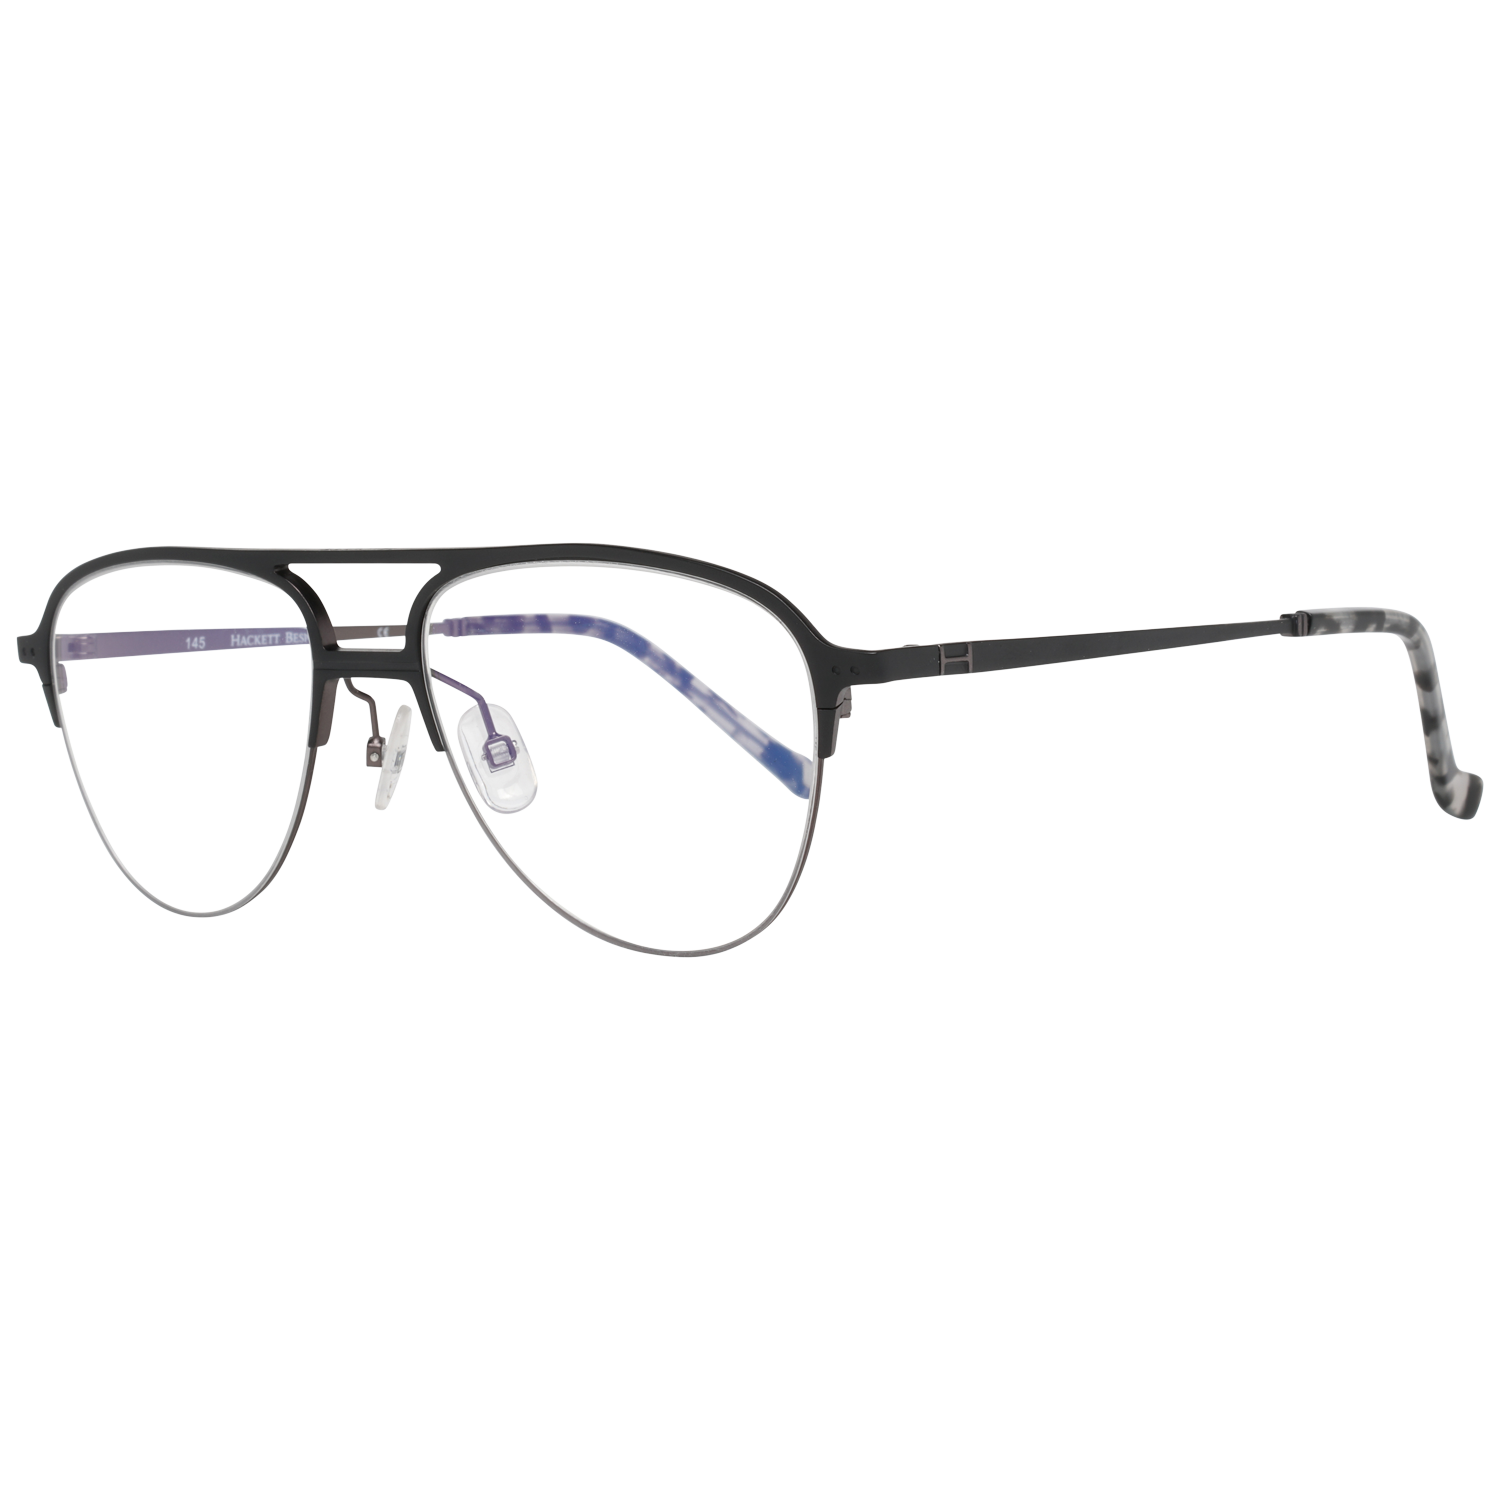 Hackett Frames Hackett Bespoke Glasses Optical Frame Blue-Filter HEB246 002 53 Eyeglasses Eyewear UK USA Australia 